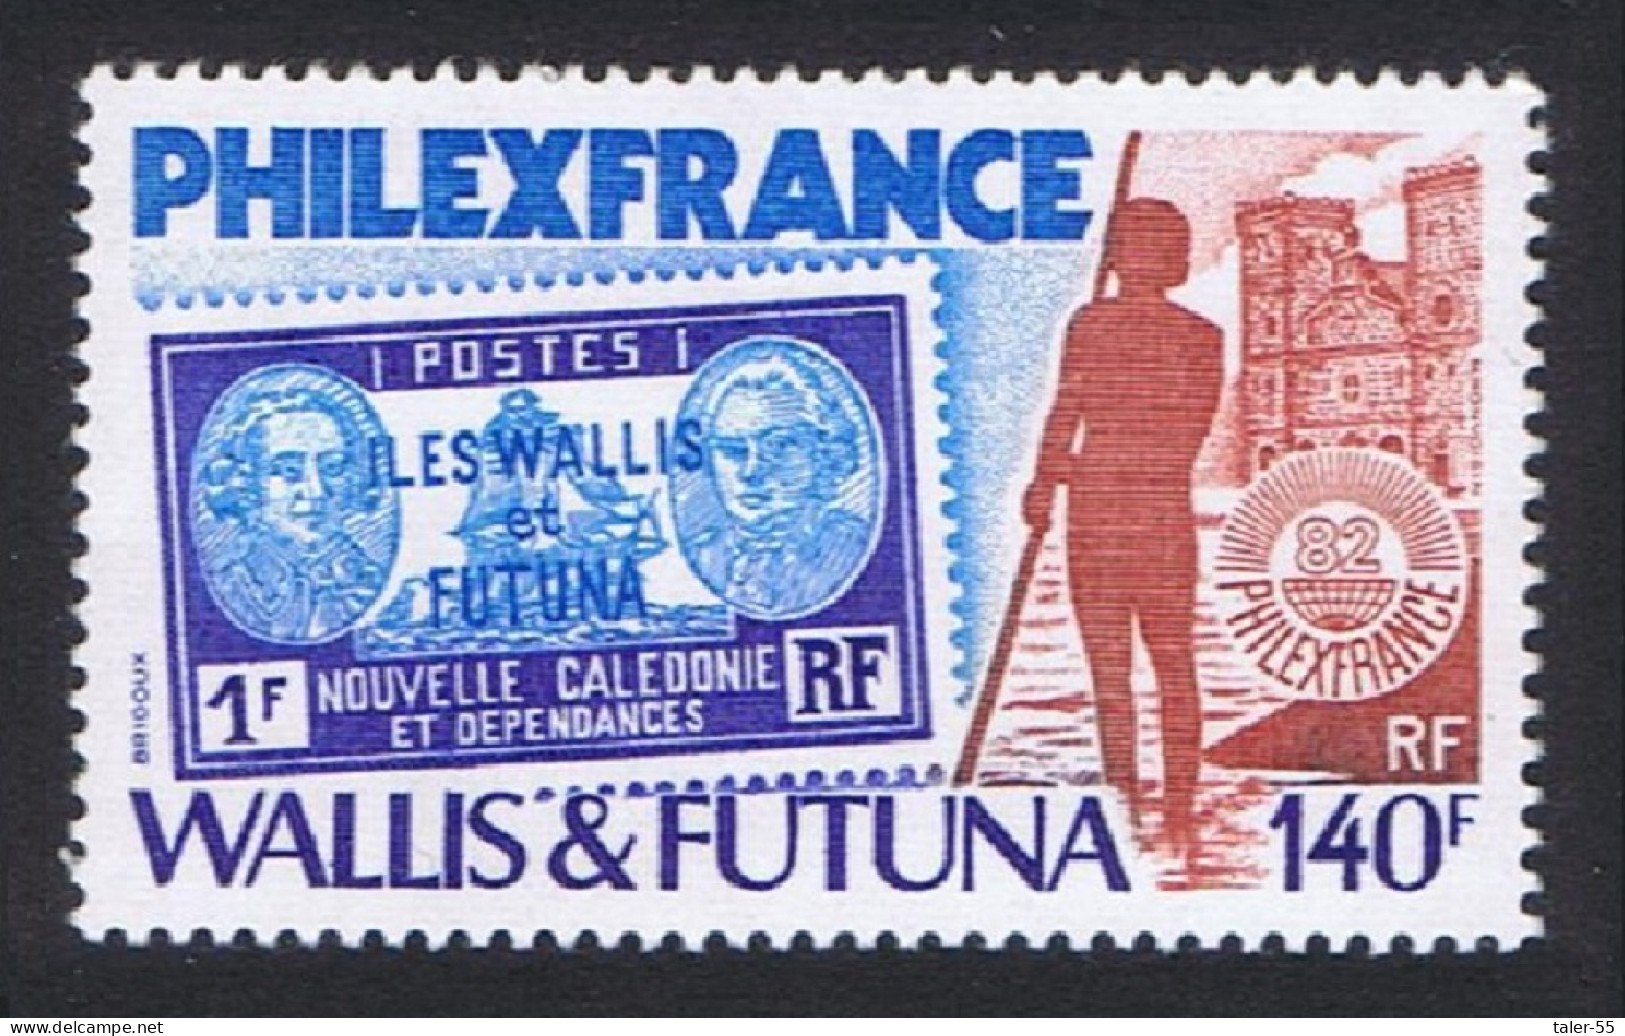 Wallis And Futuna 'Philexfrance 82' Stamp Exhibition 1982 MNH SG#395 Sc#282 - Ongebruikt